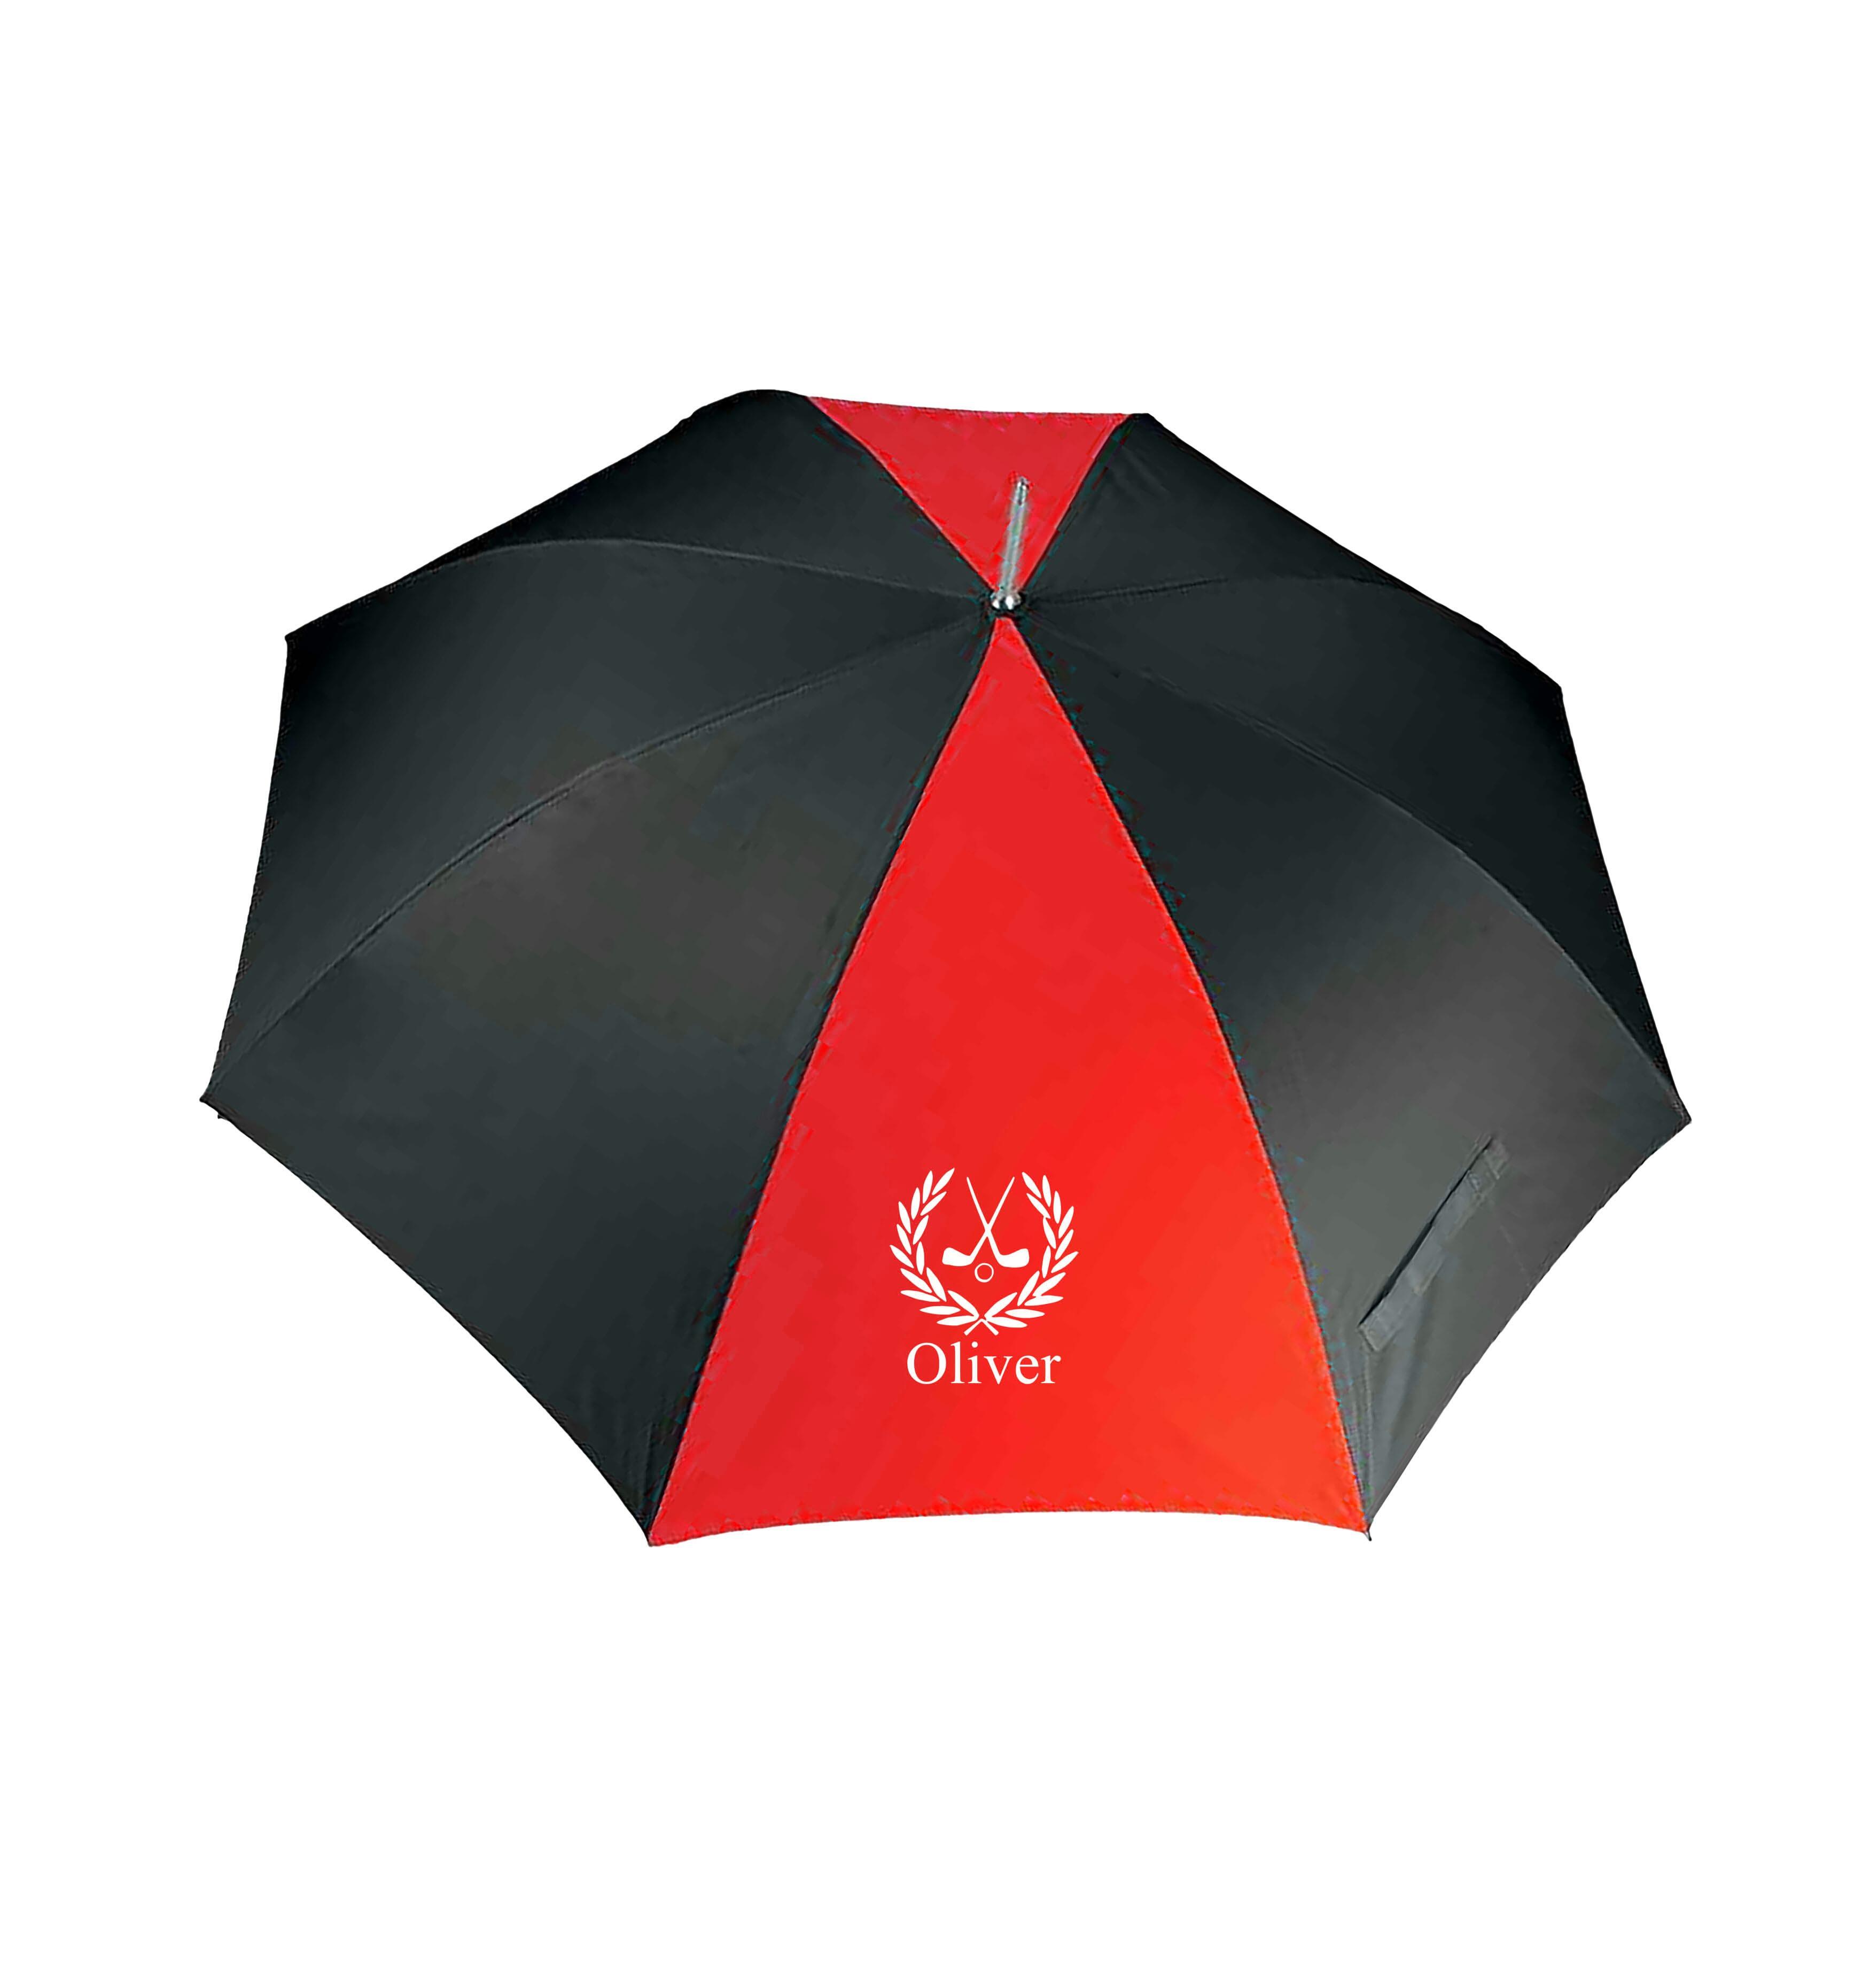 Personalised Large Golf Umbrella Black/Red